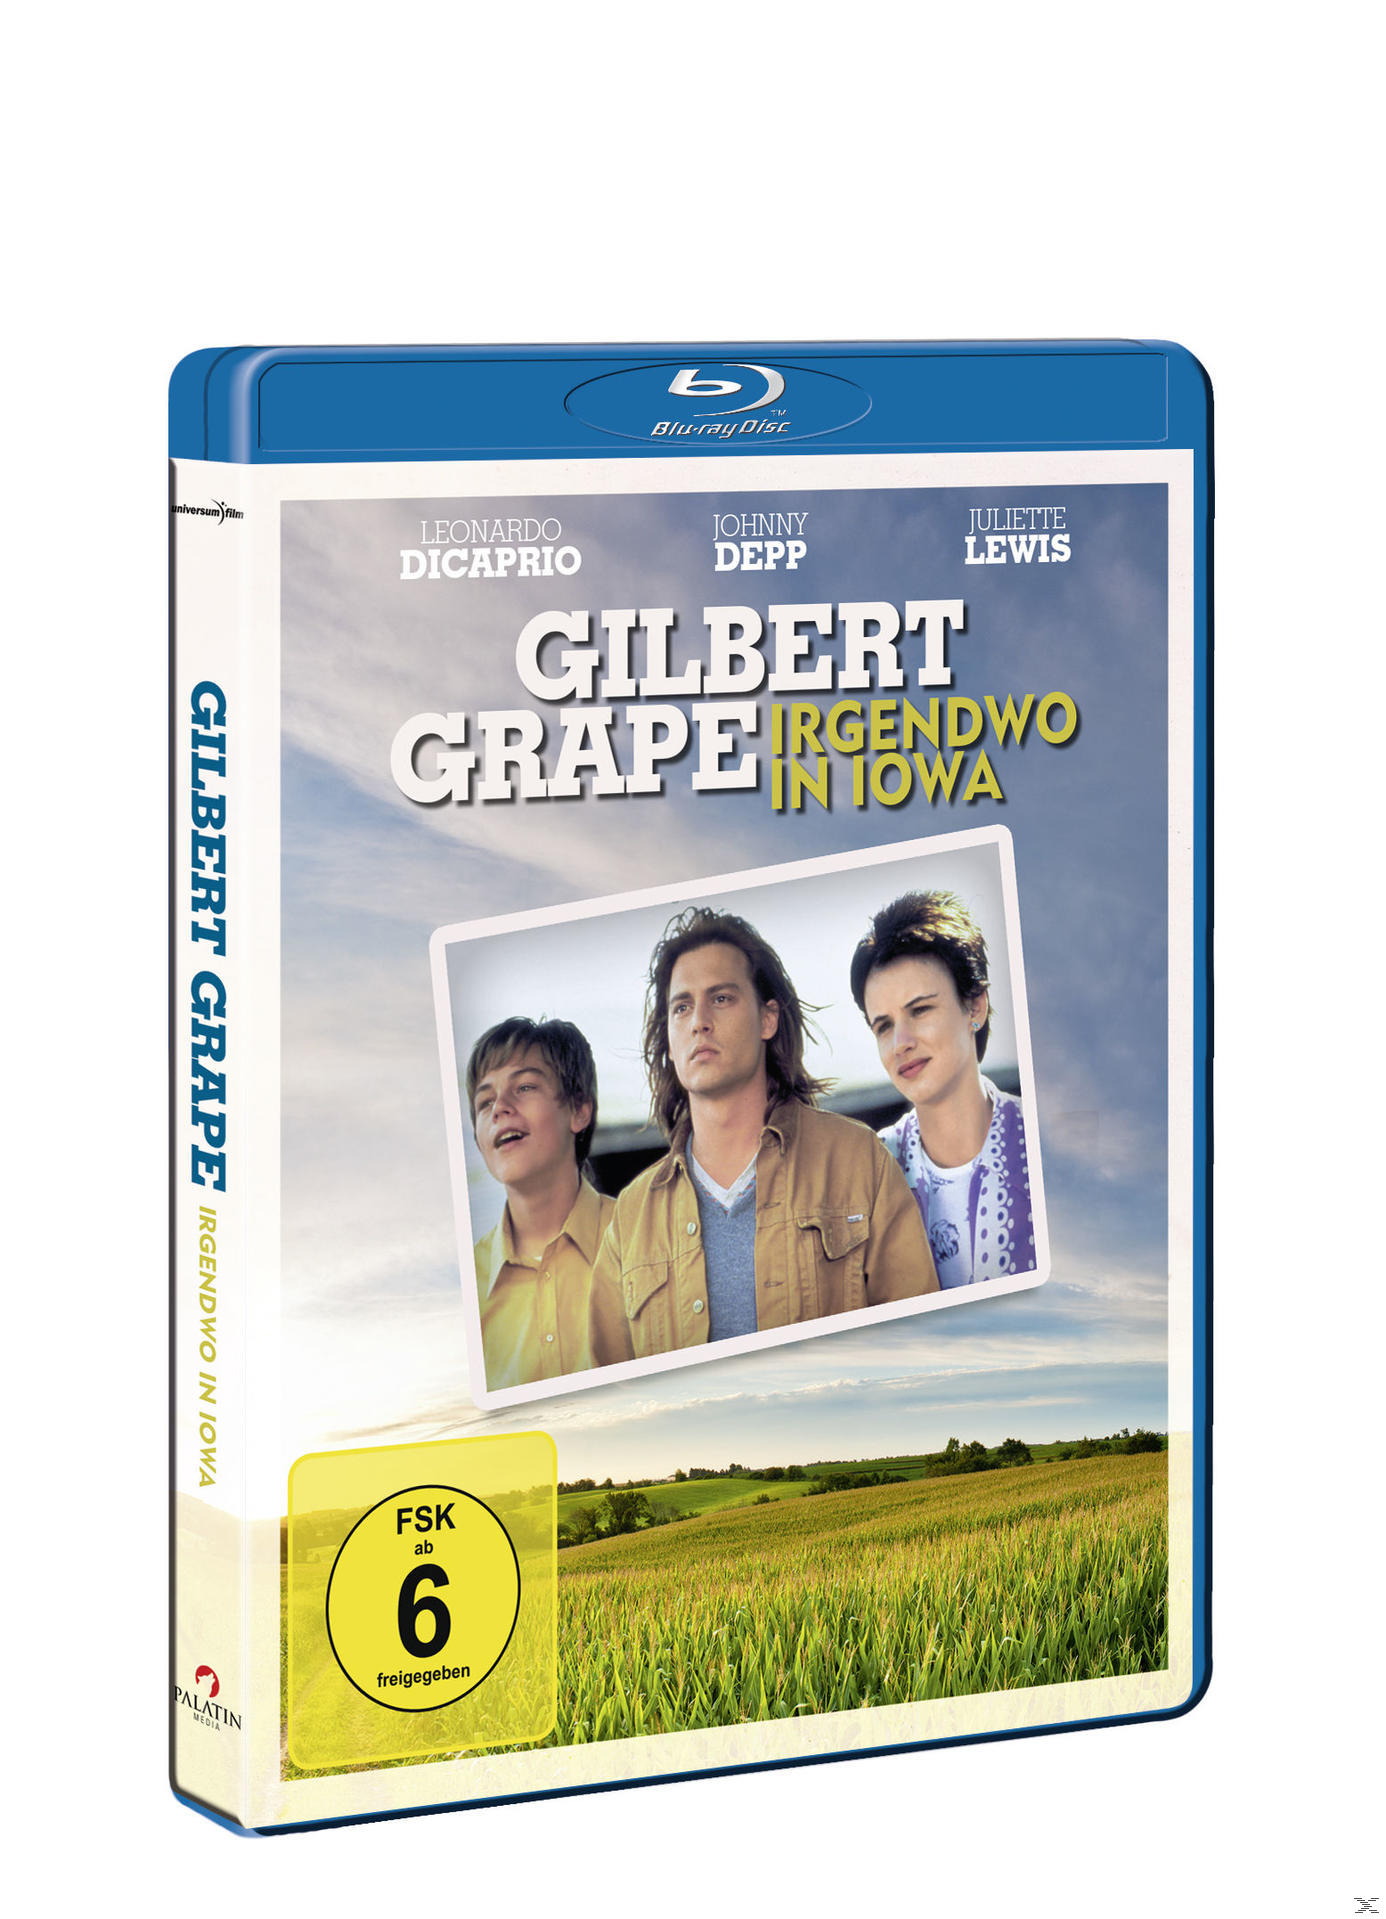 - in Blu-ray Irgendwo Grape Iowa Gilbert